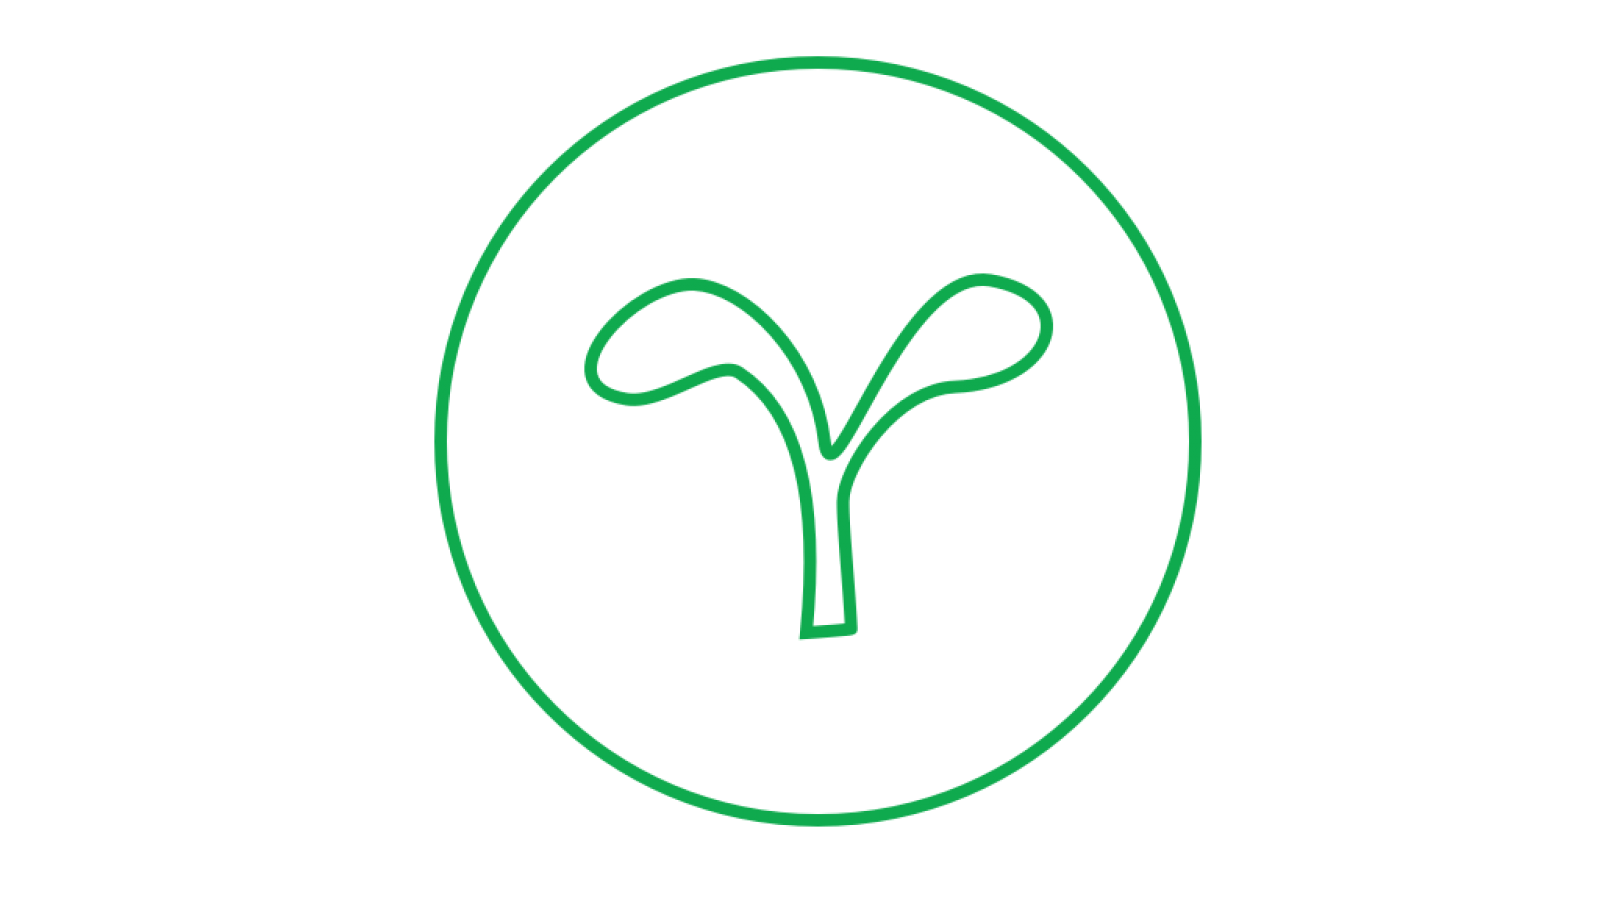 Bóthar icon in a green circle